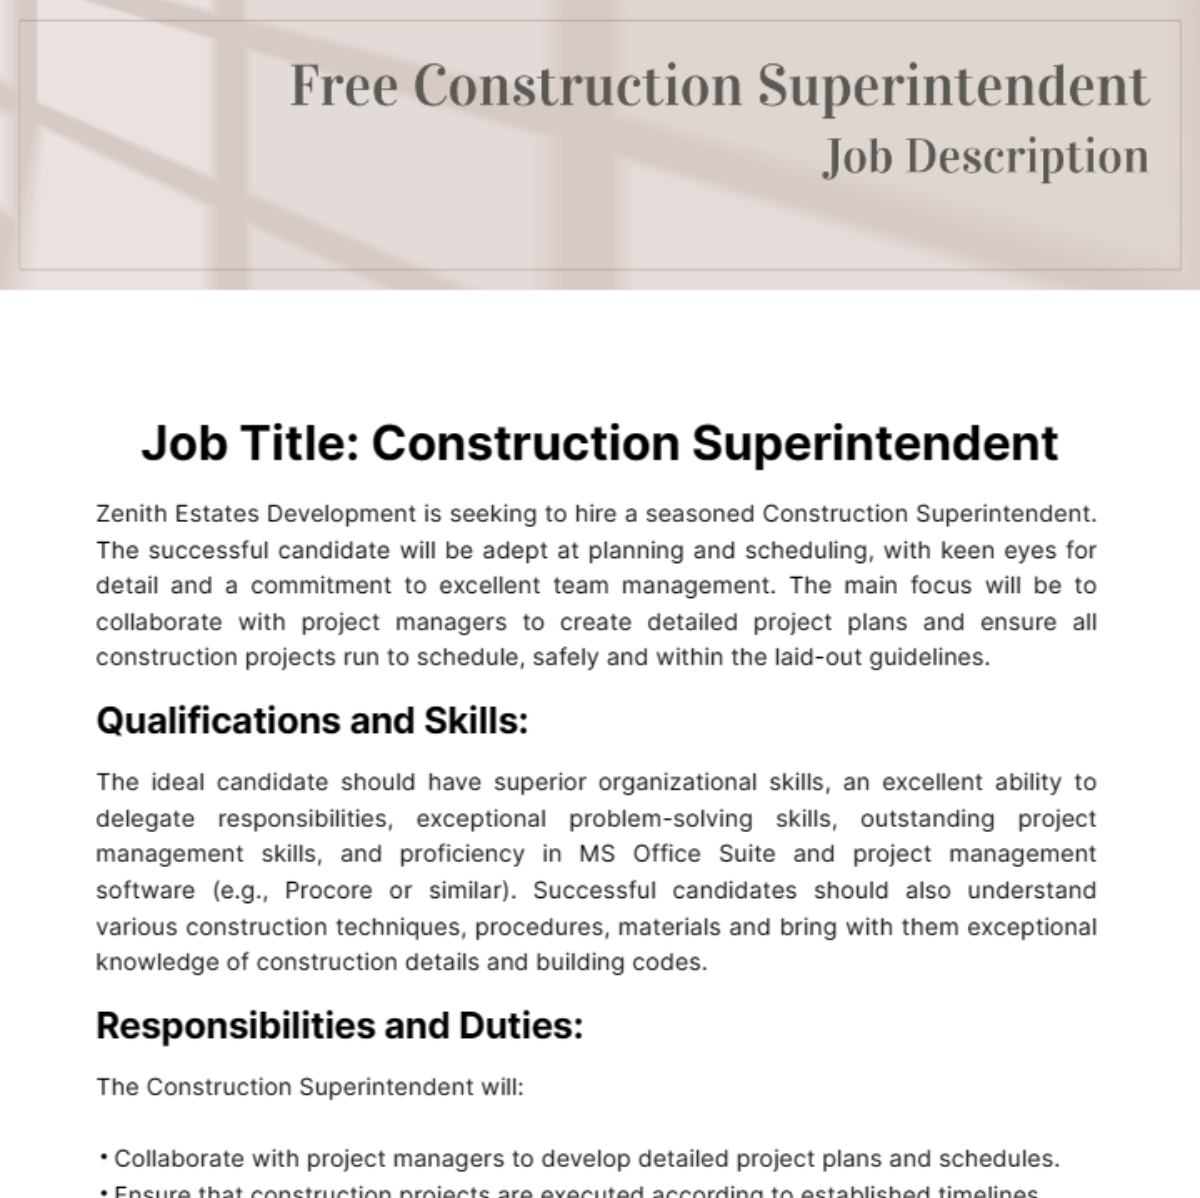 Free Construction Superintendent Job Description Template